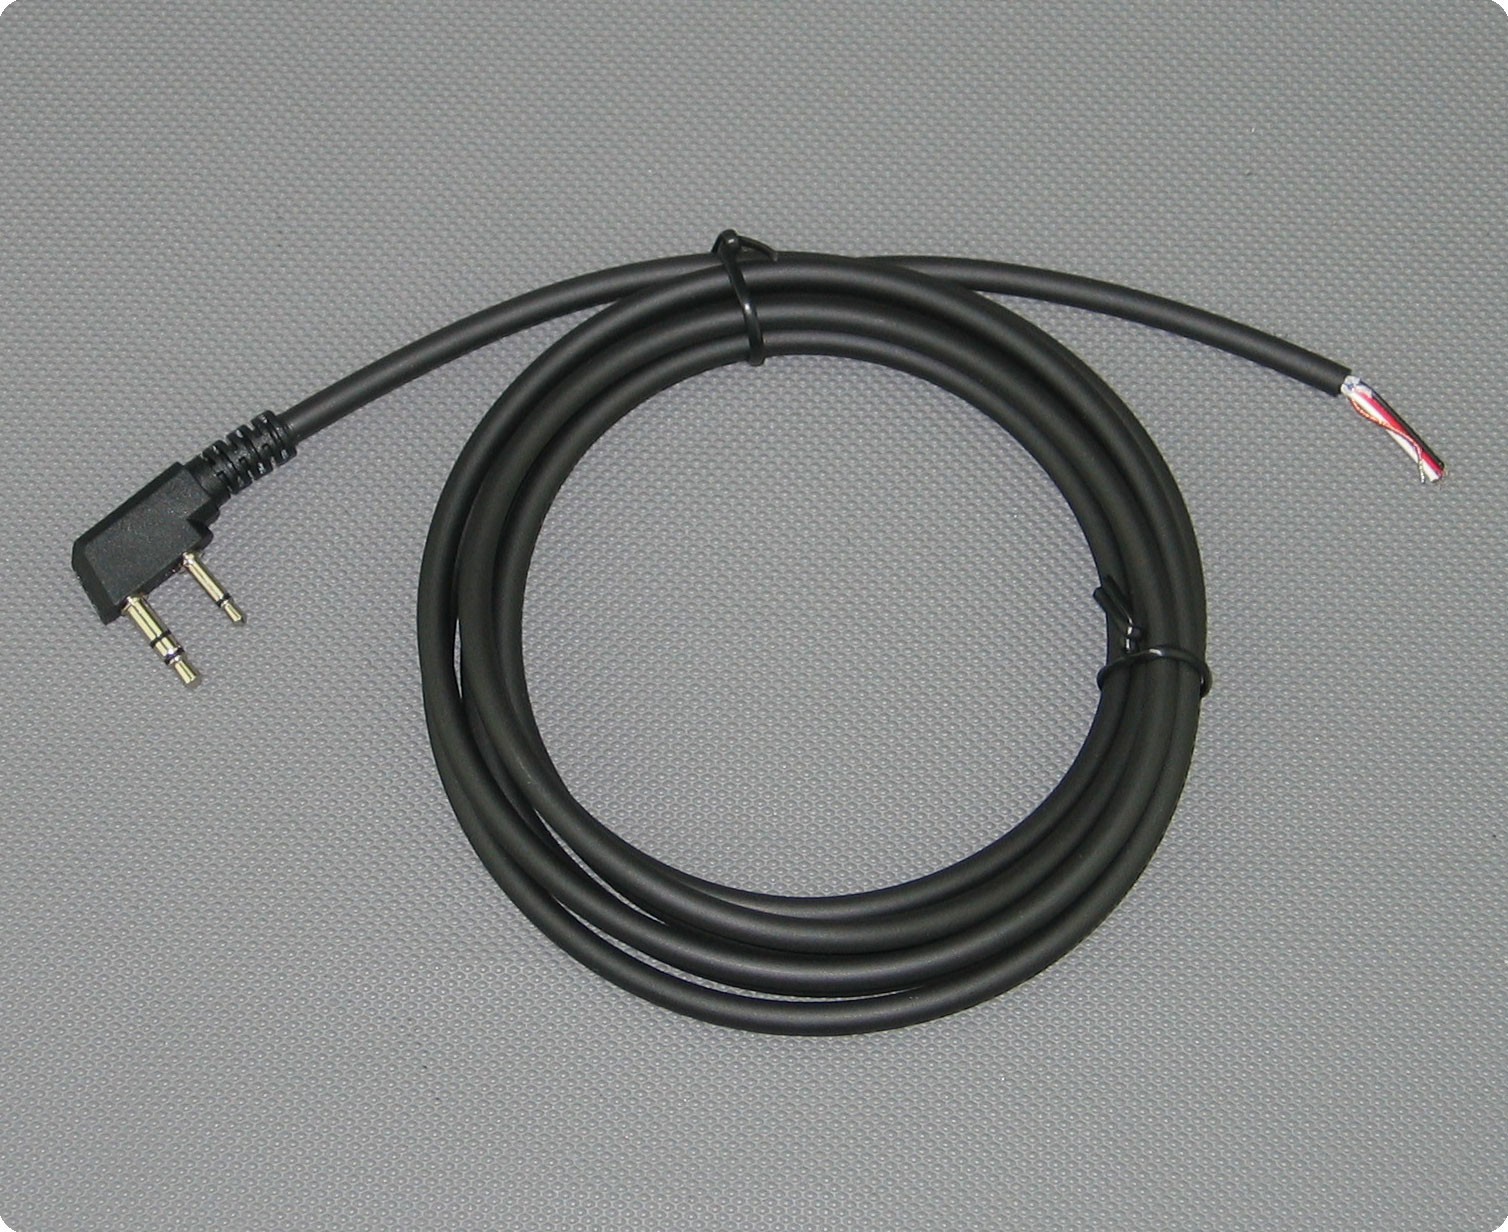 Cable con doble clavija S1 2,5 / 3,5 [mm] en ángulo de 90° Diámetro de 4,8 [mm] Longitud de 200 [cm]